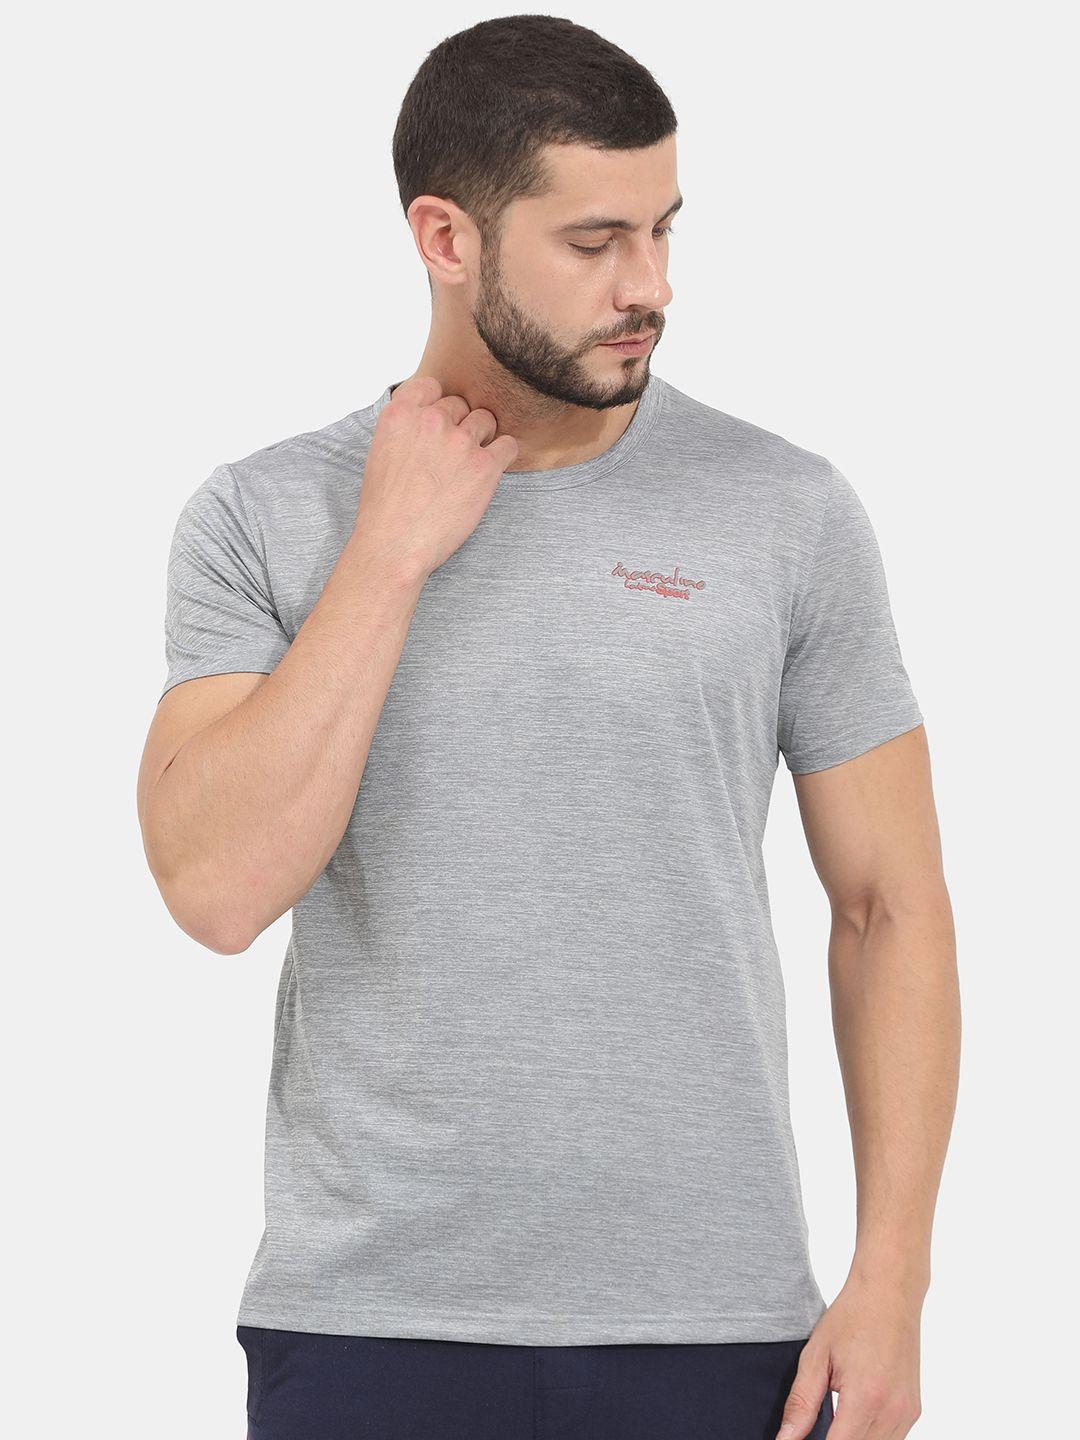 masculino latino men grey training or gym sports t-shirt